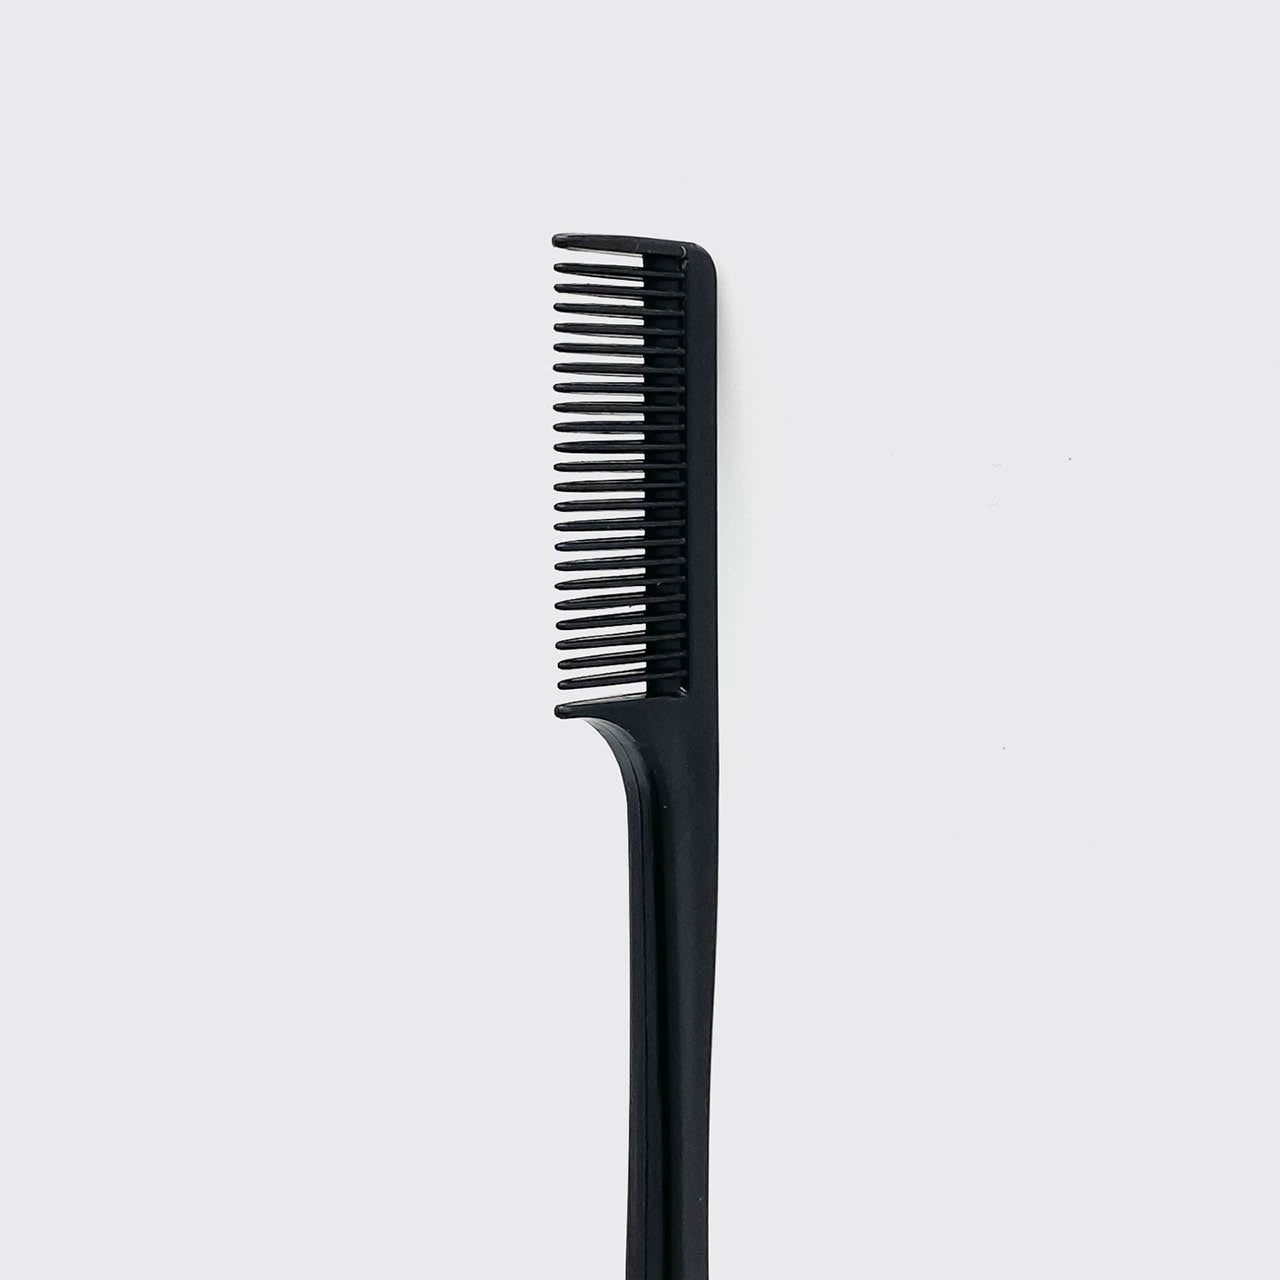 Mini Metal Travel Hair Brush - Kitsch